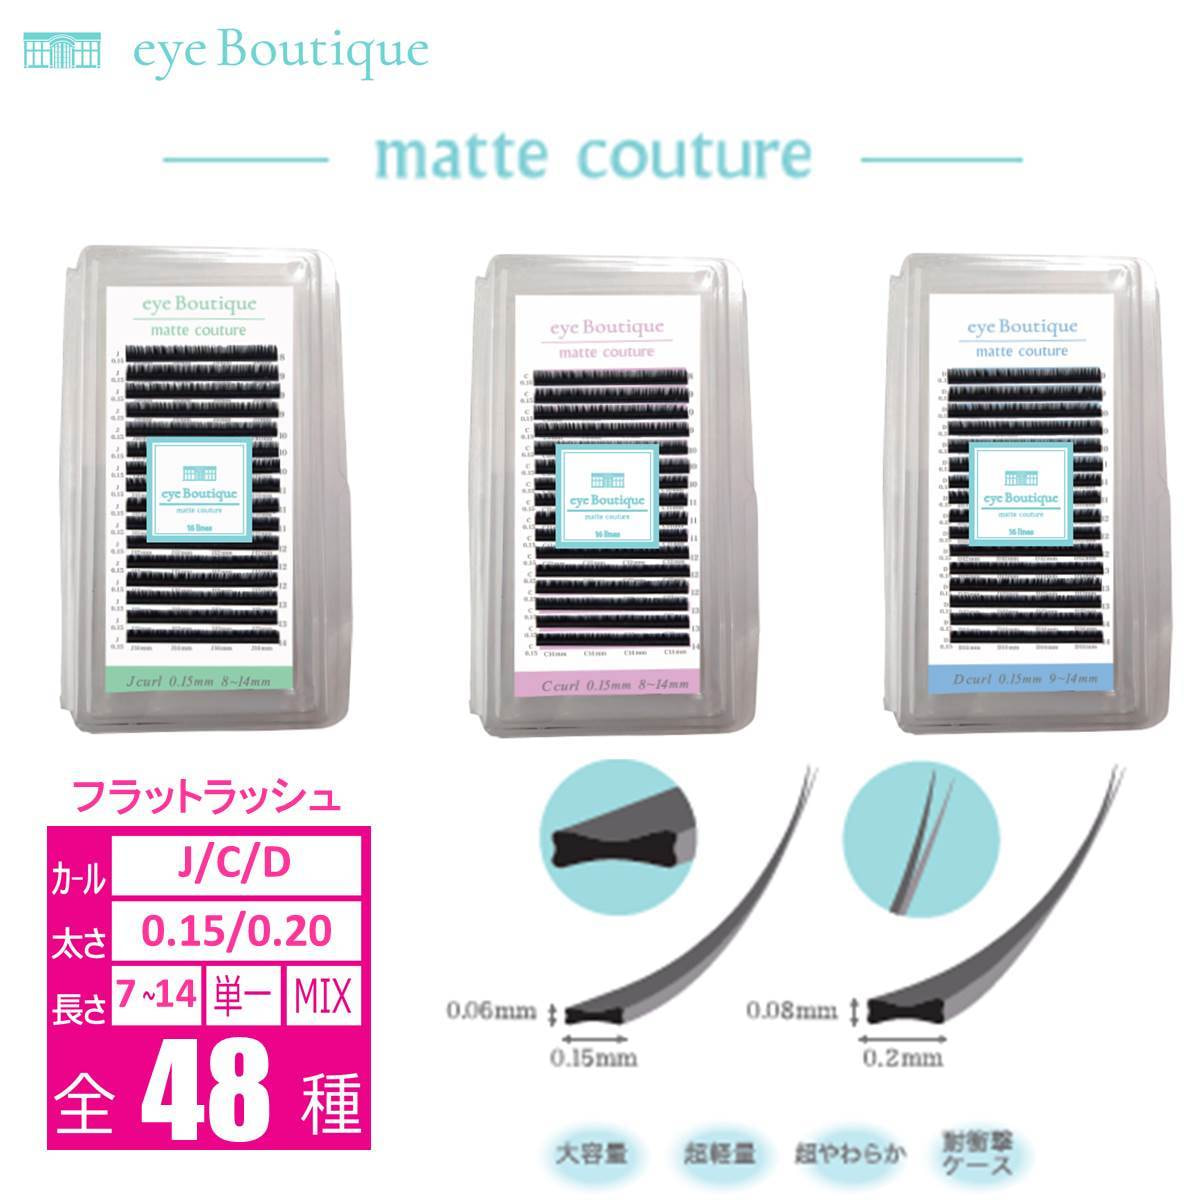 【eye Boutique】大容量フラットラッシュmatte couture(マットクチュール) 16列